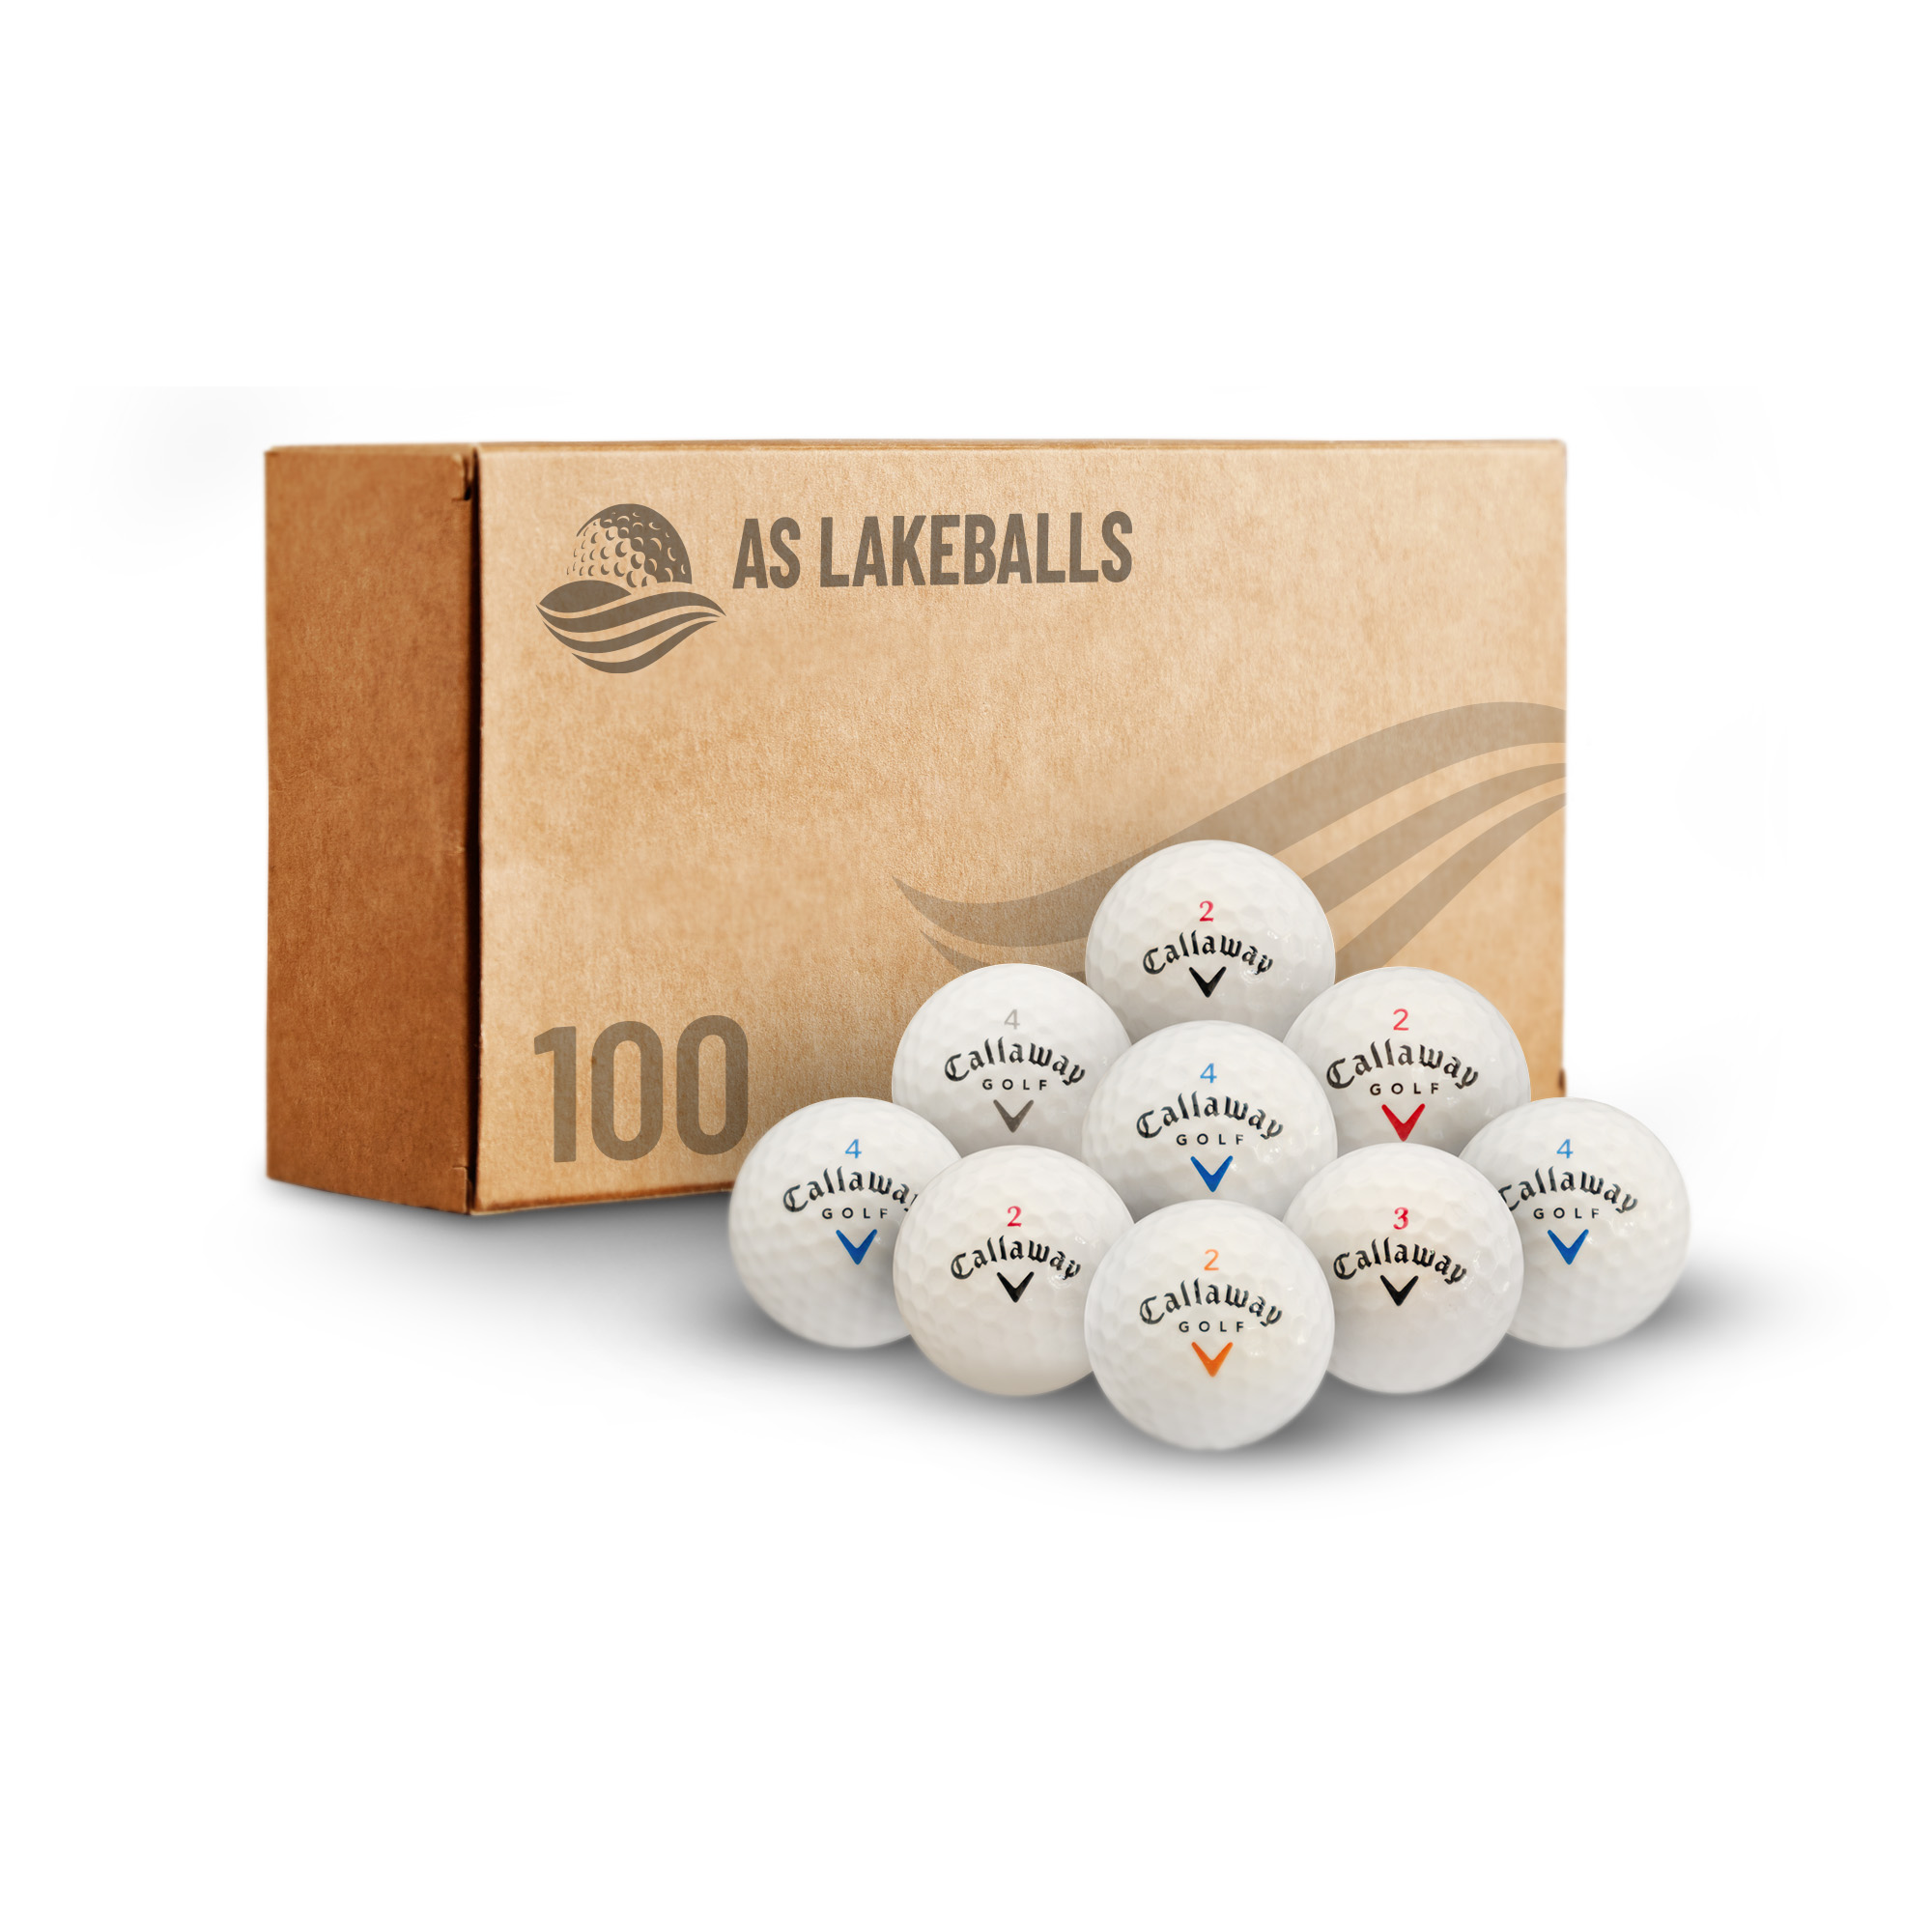 100 Stück Callaway Mix AAAA Lakeballs bei AS Lakeballs günstig kaufen